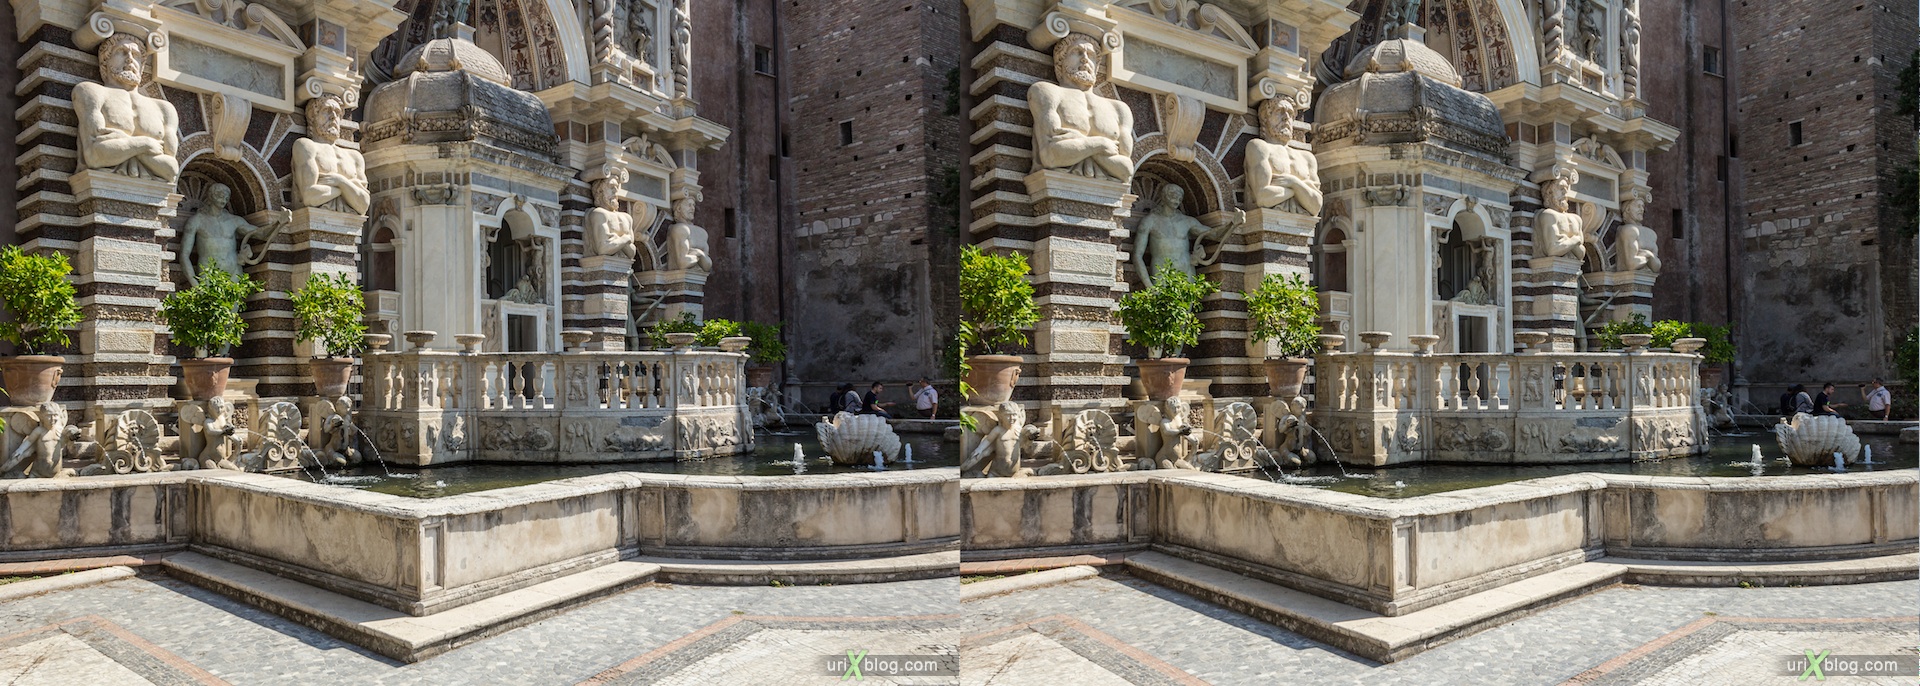 2012, Organ Fountain, Fontana dell'Organo, villa D'Este, Italy, Tivoli, Rome, 3D, stereo pair, cross-eyed, crossview, cross view stereo pair